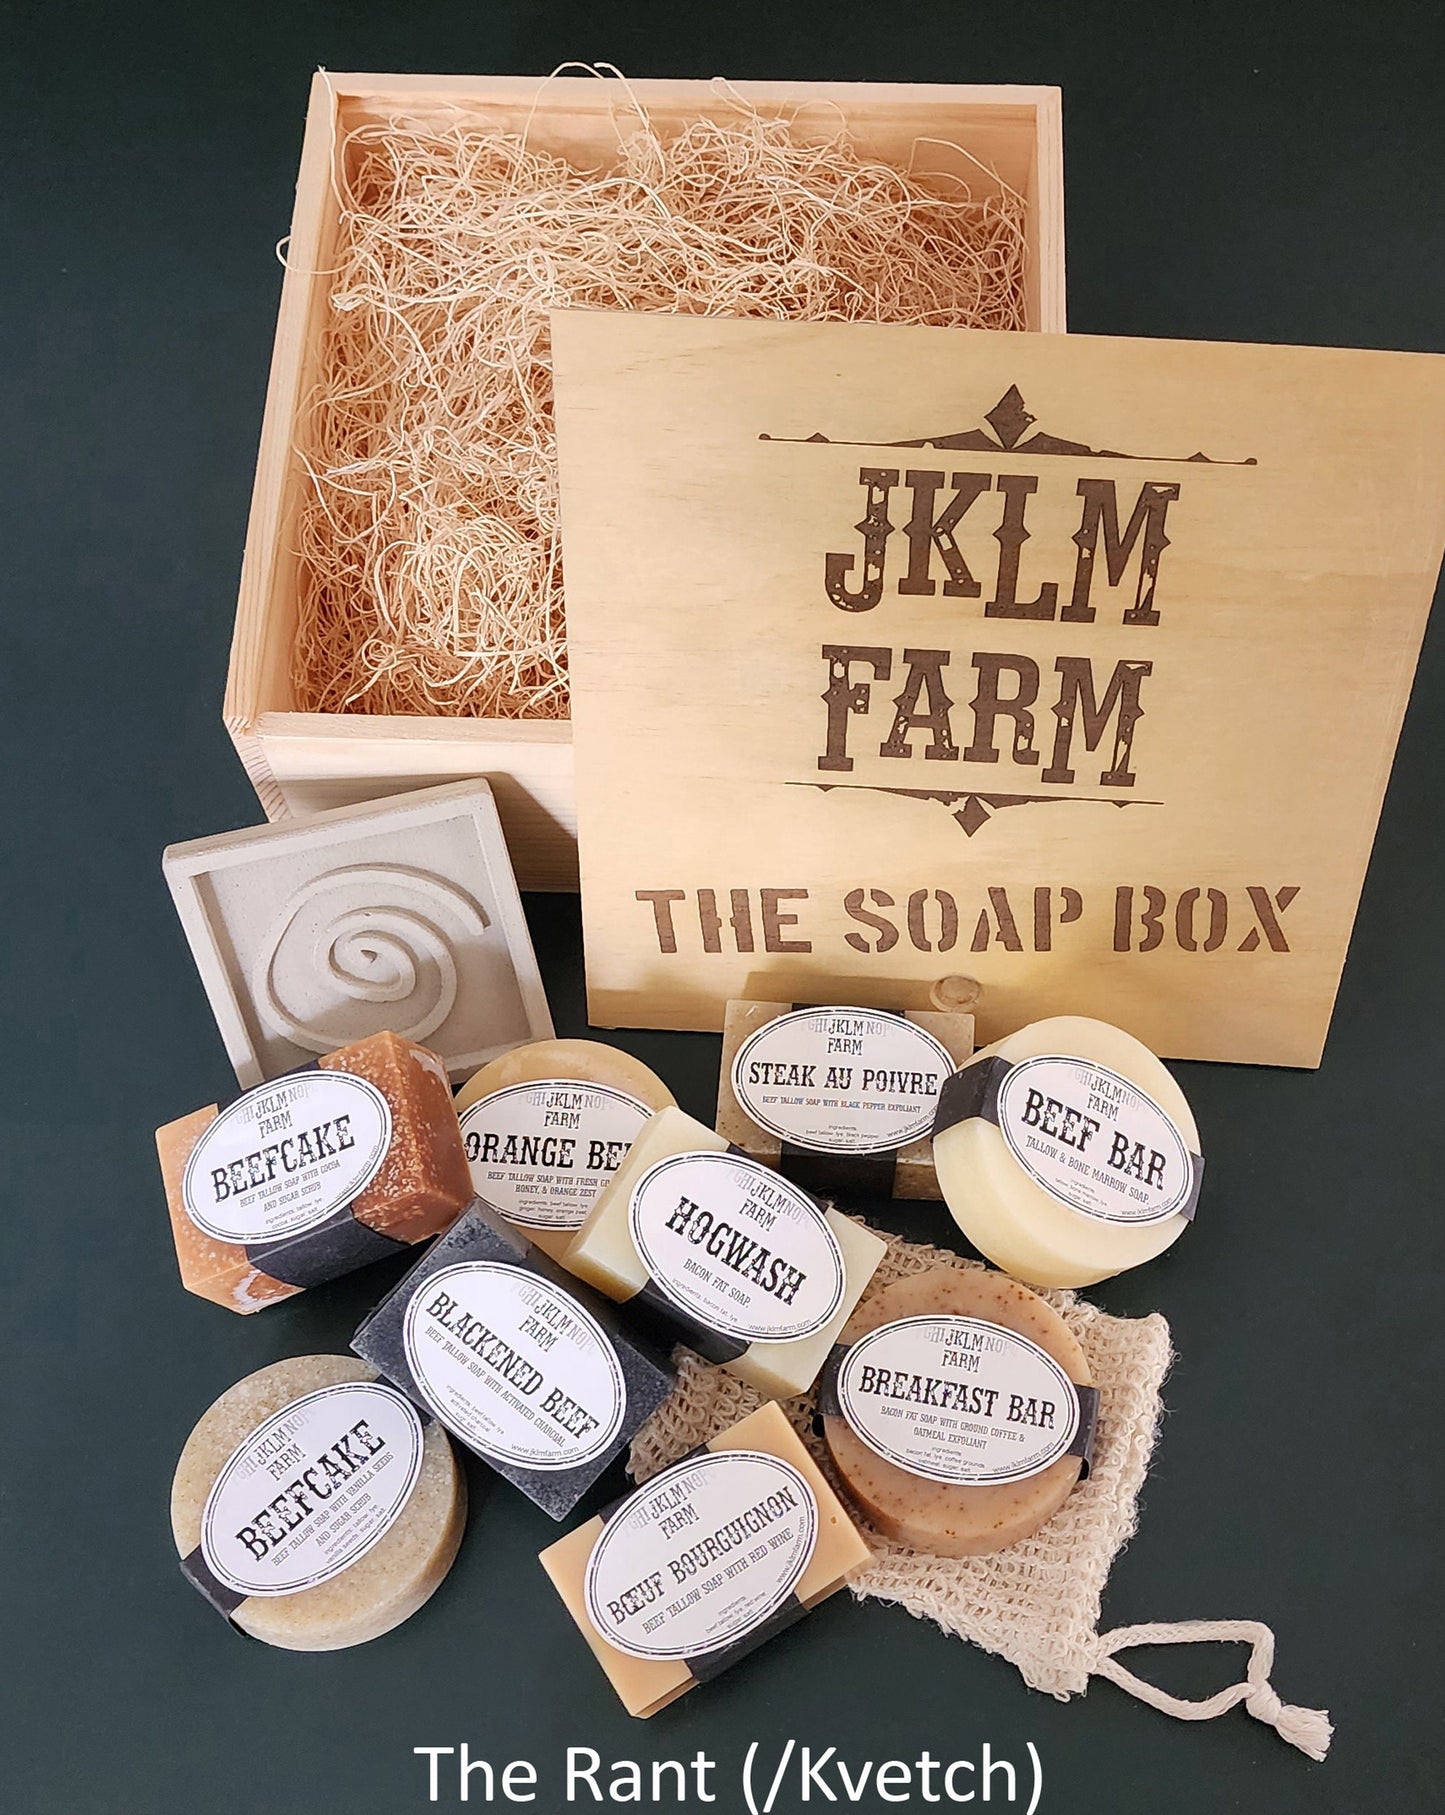 jklm farm natural organic grass-fed tallow marrow soap box gift set rant